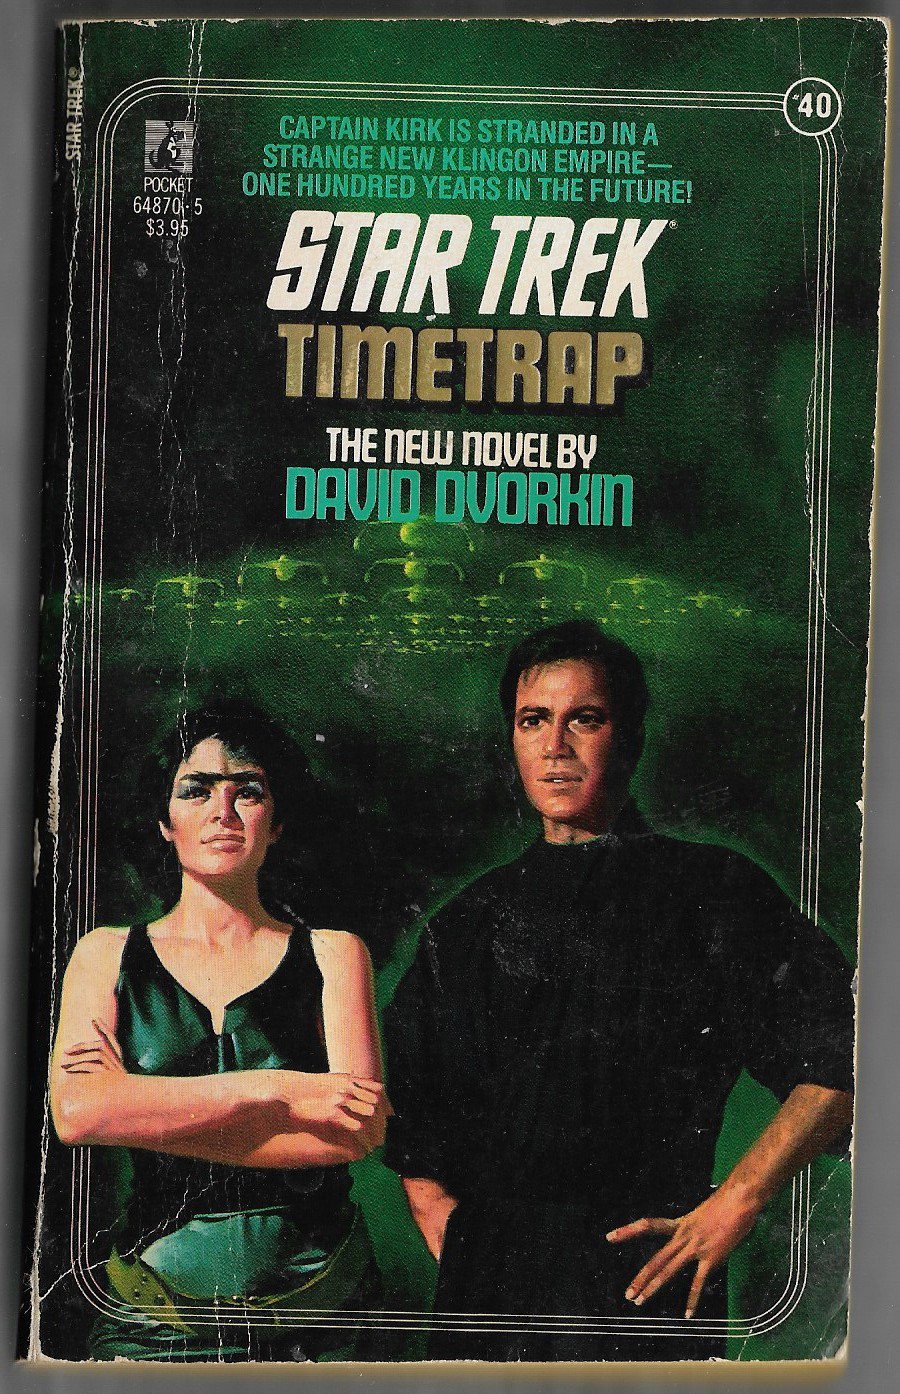 Timetrap by David Dvorkin Book 40 Star Trek Original series 0671648705